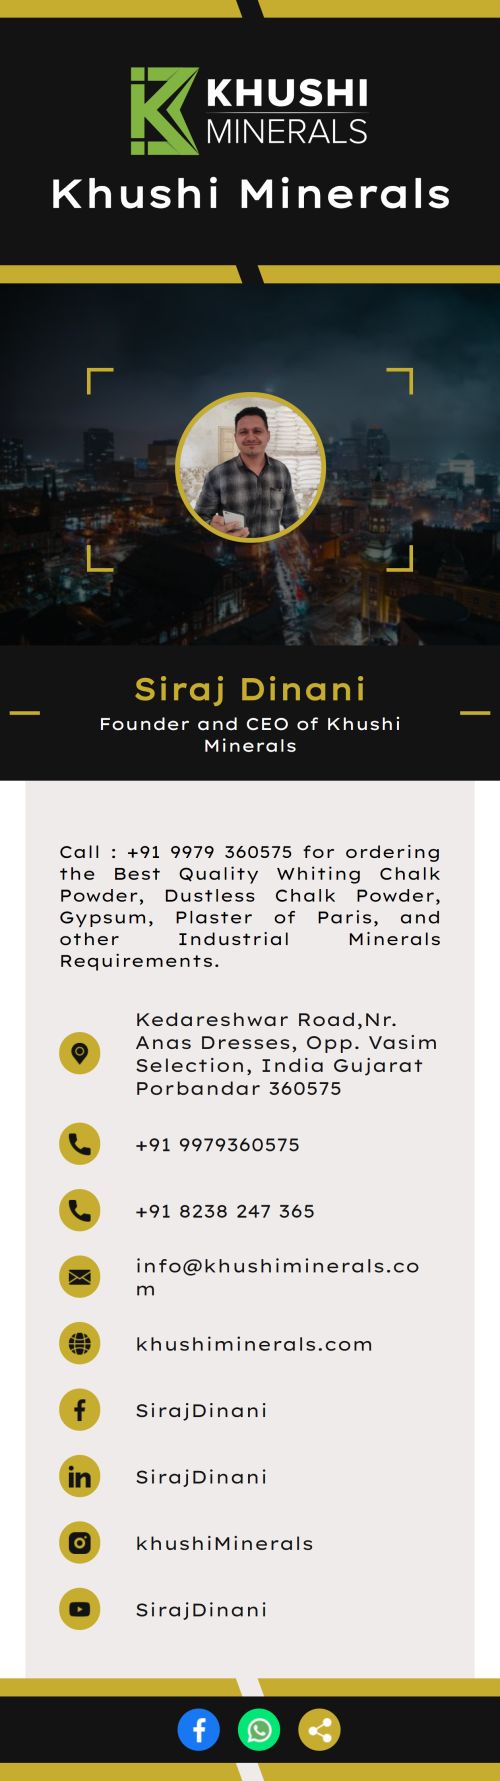 ccl0004 - Siraj Dinani - Khushi Minerals - Digital Visiting Card by CardNet